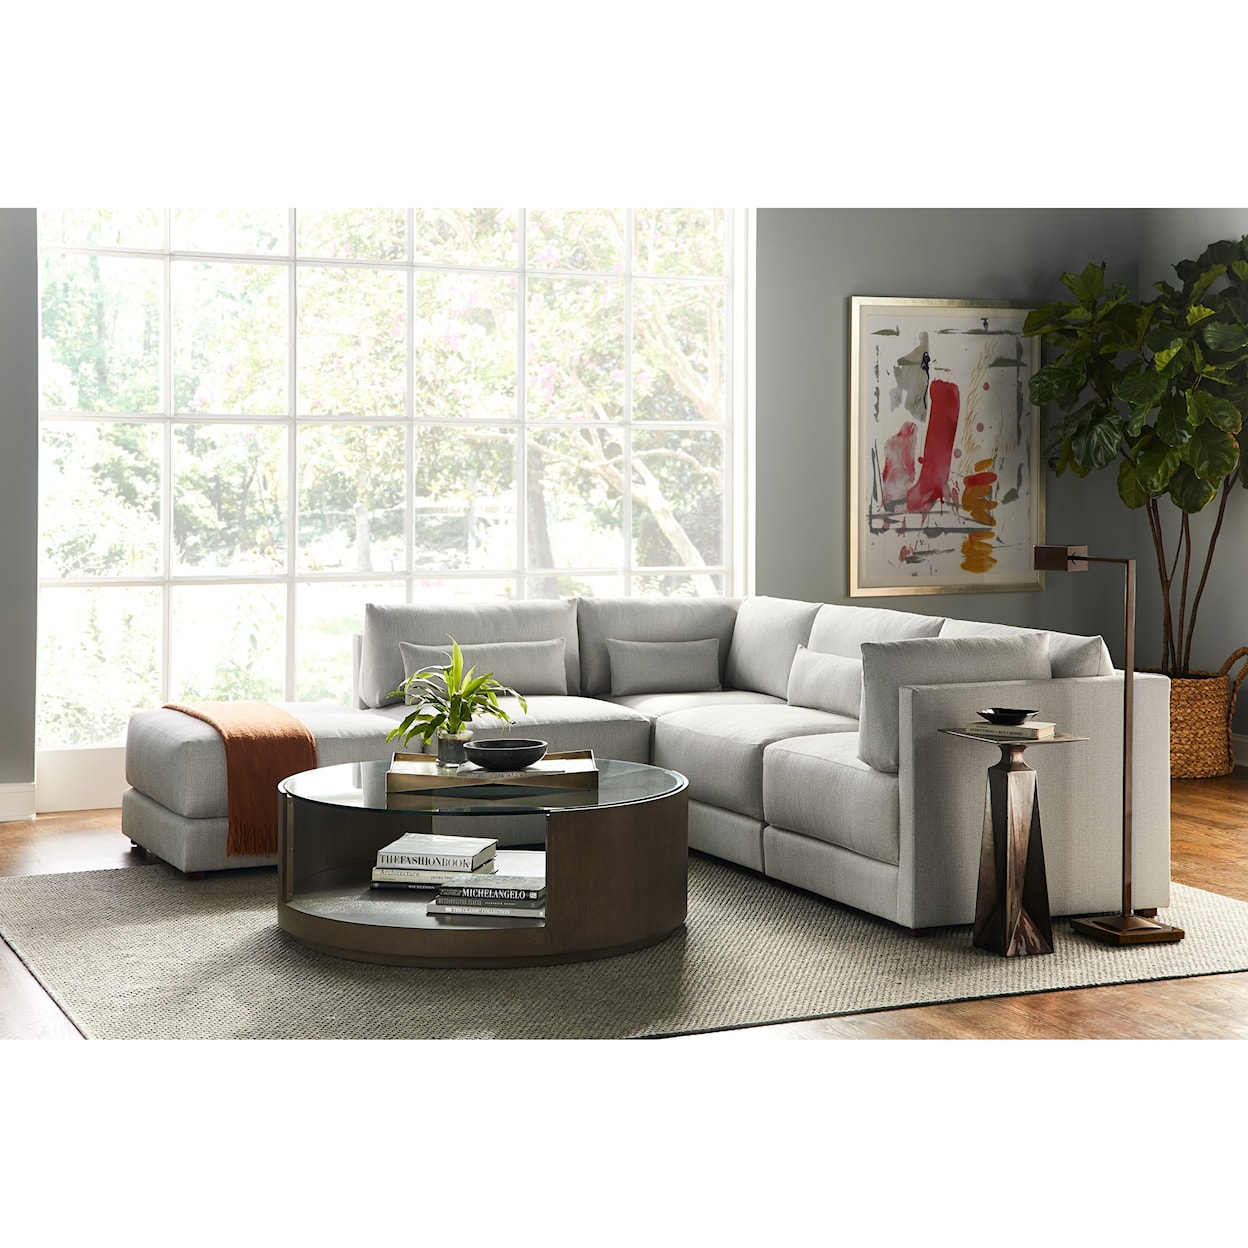 Vanguard Furniture Ember Spot Table